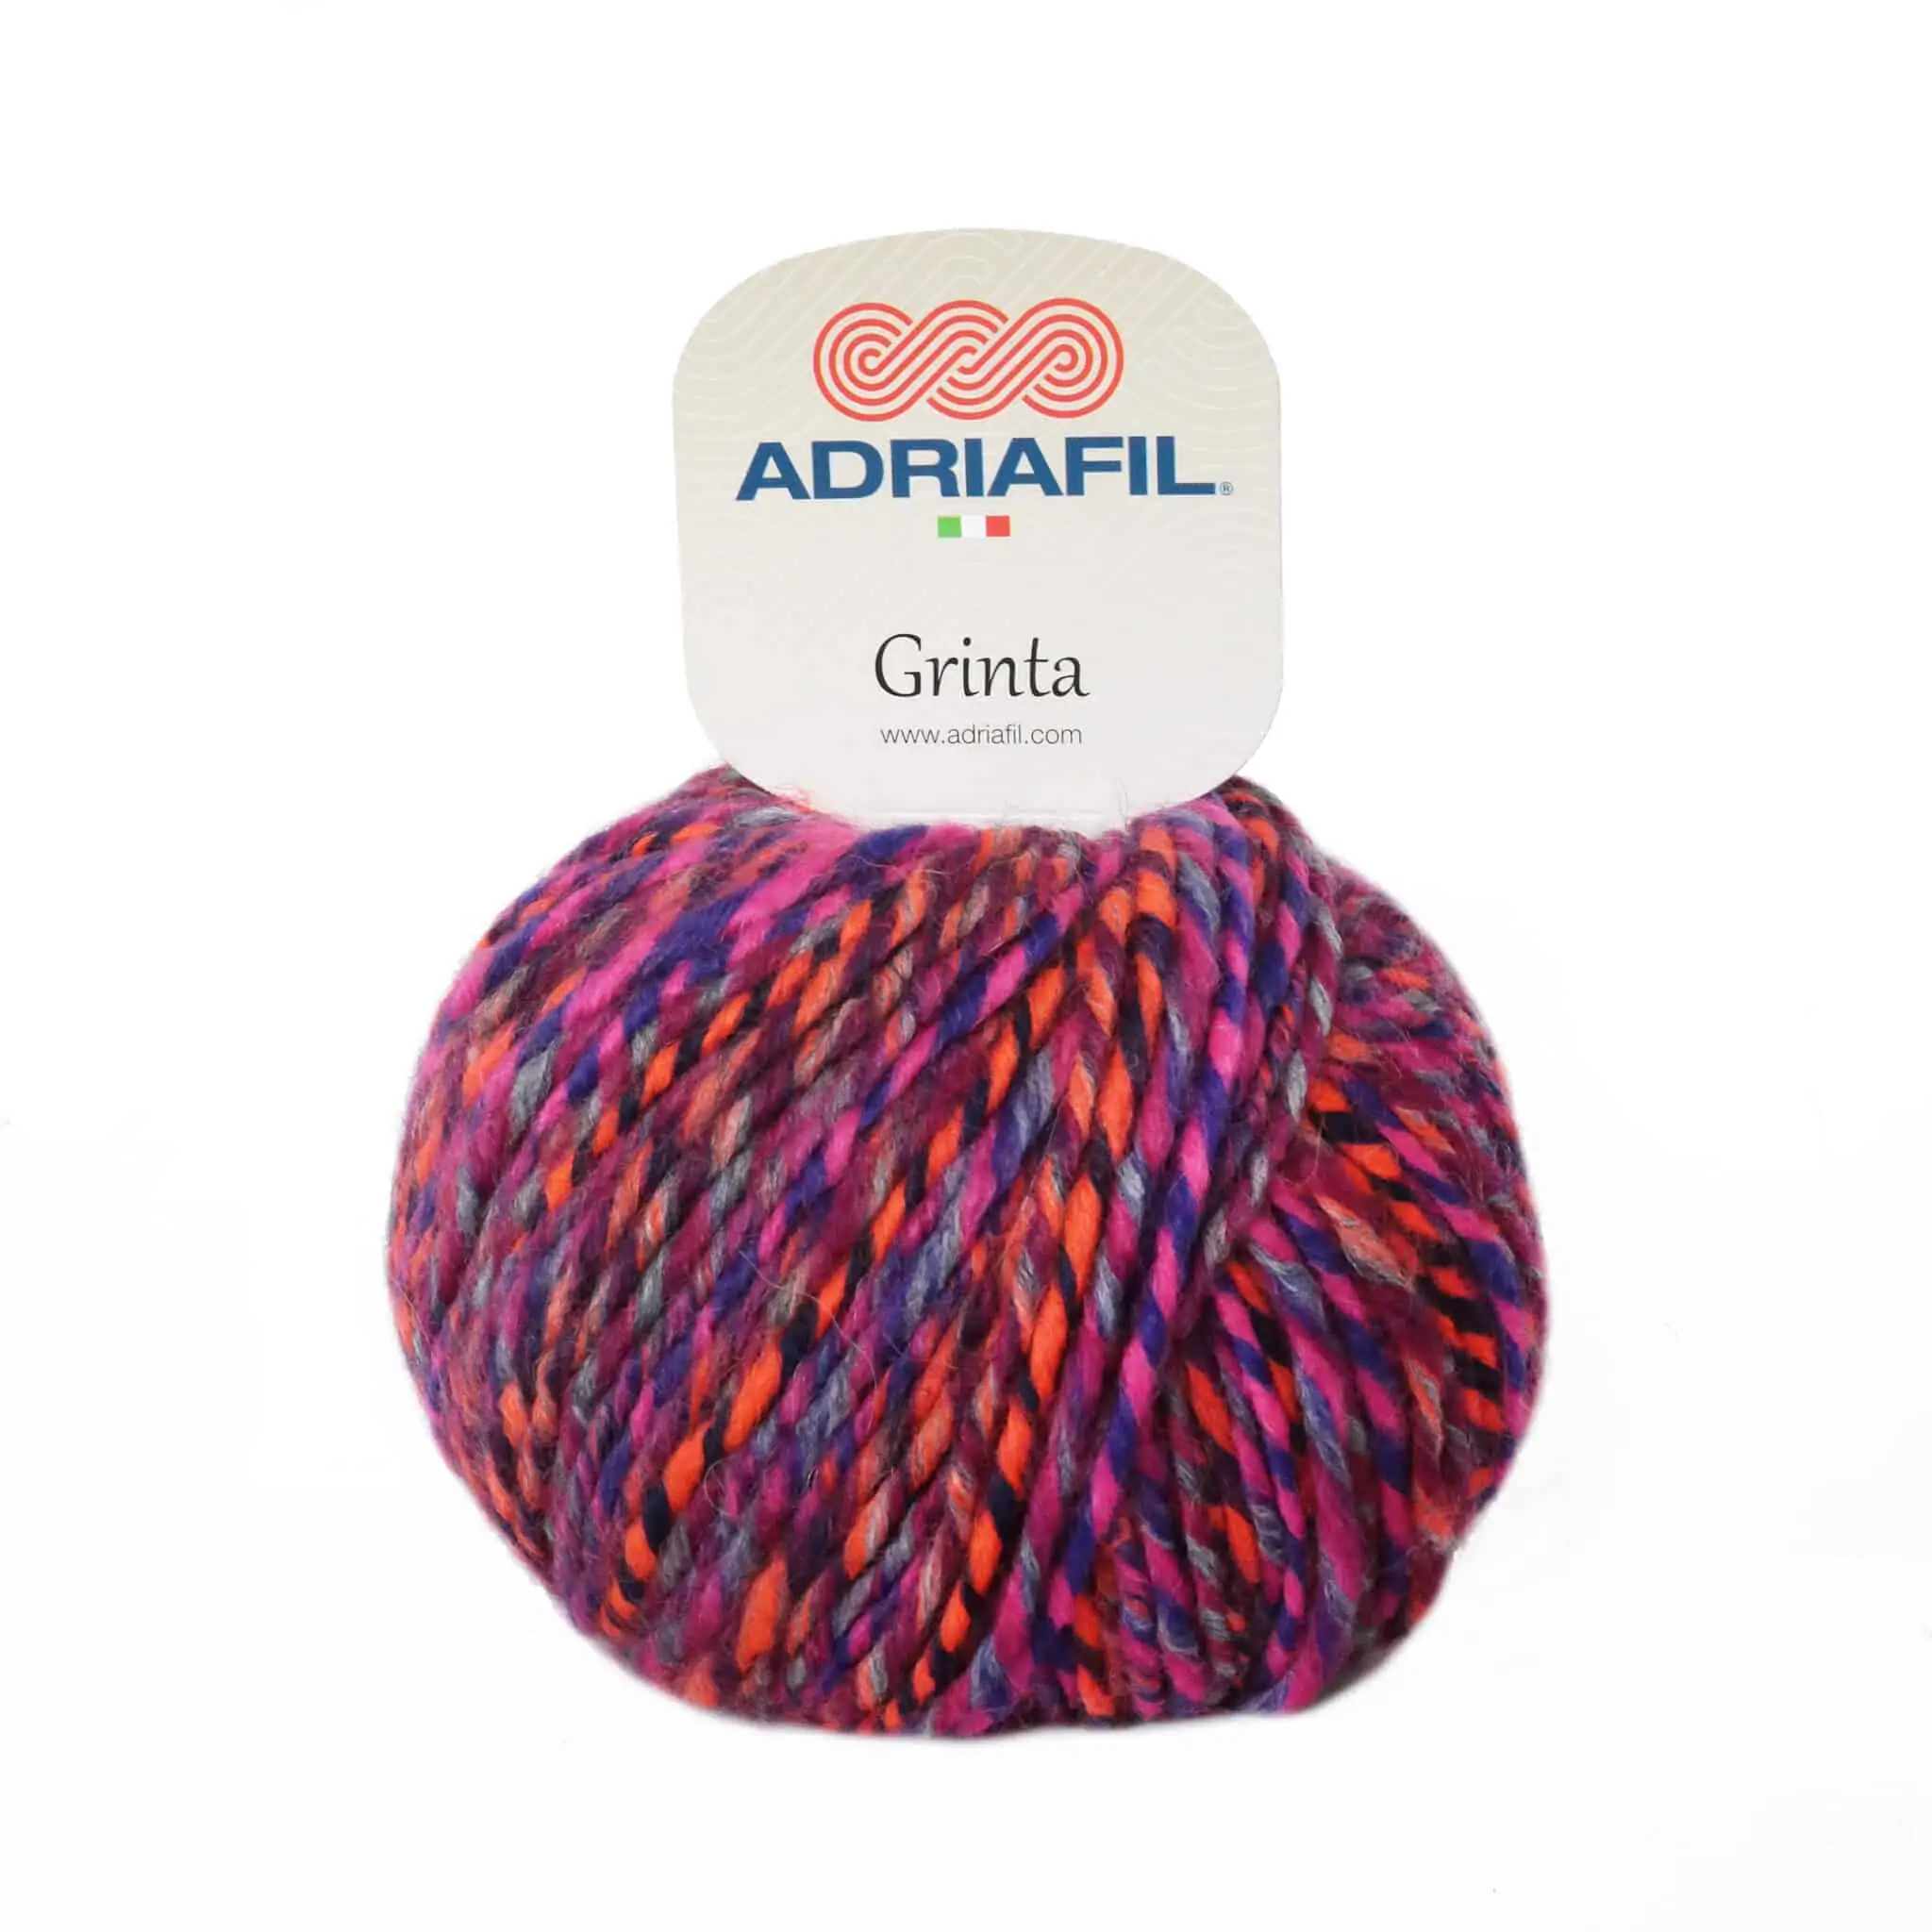 Yarn - Adriafil Grinta Aran / Chunky in Fuchsia 42